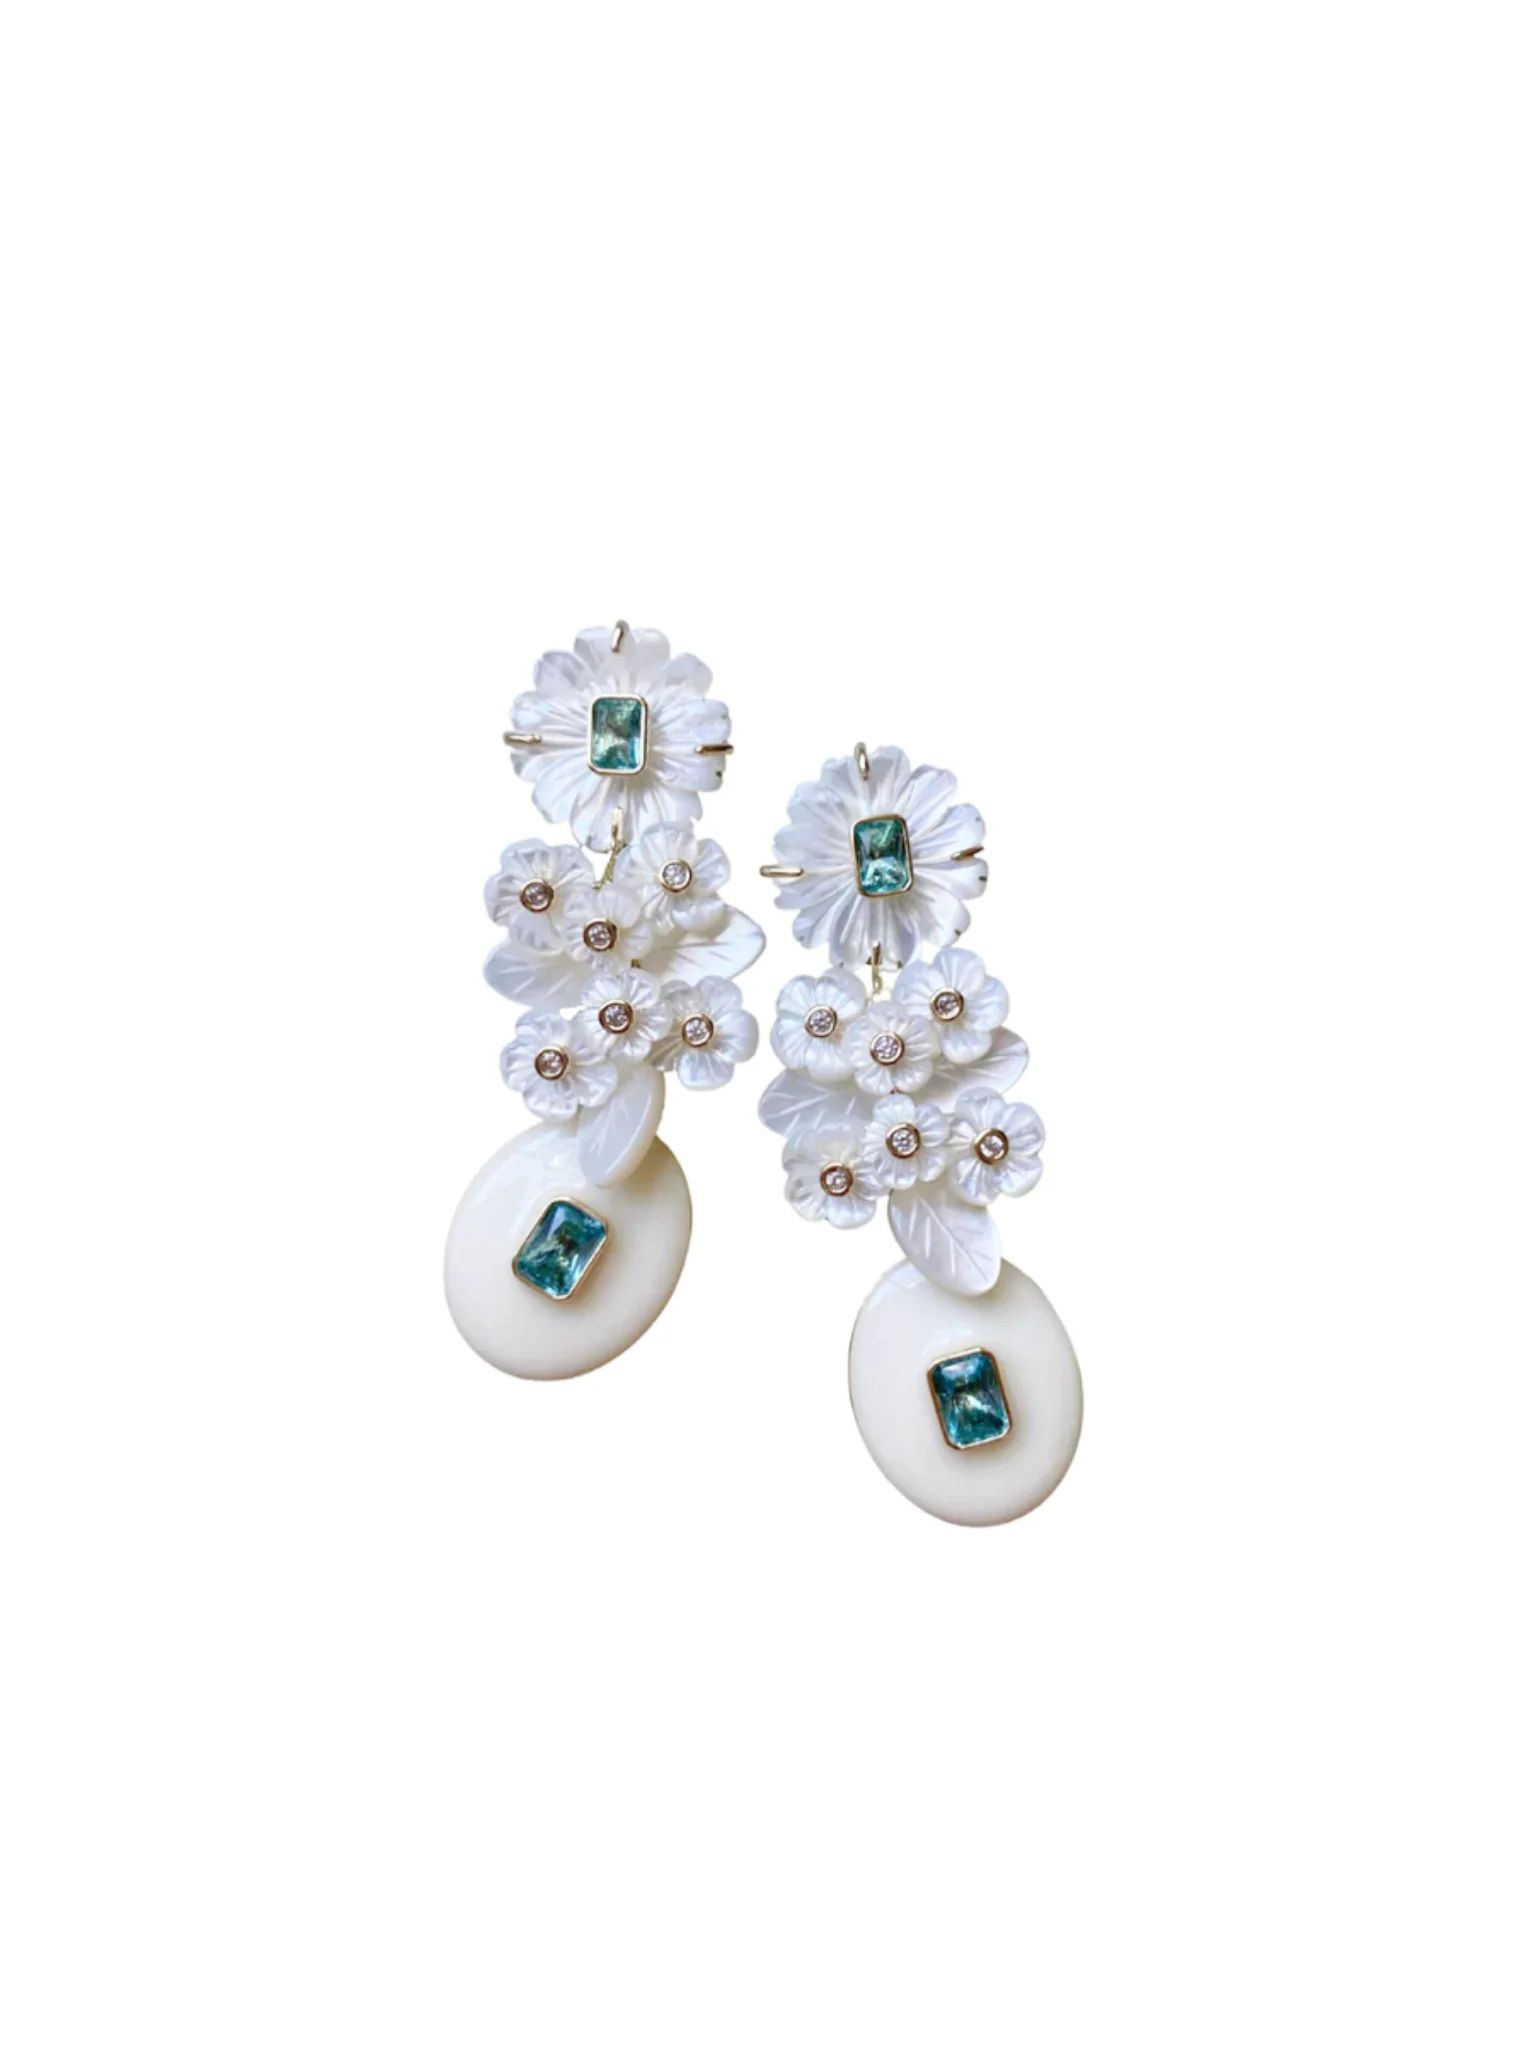 mother of pearl + aquamarine + enamel | Nicola Bathie Jewelry